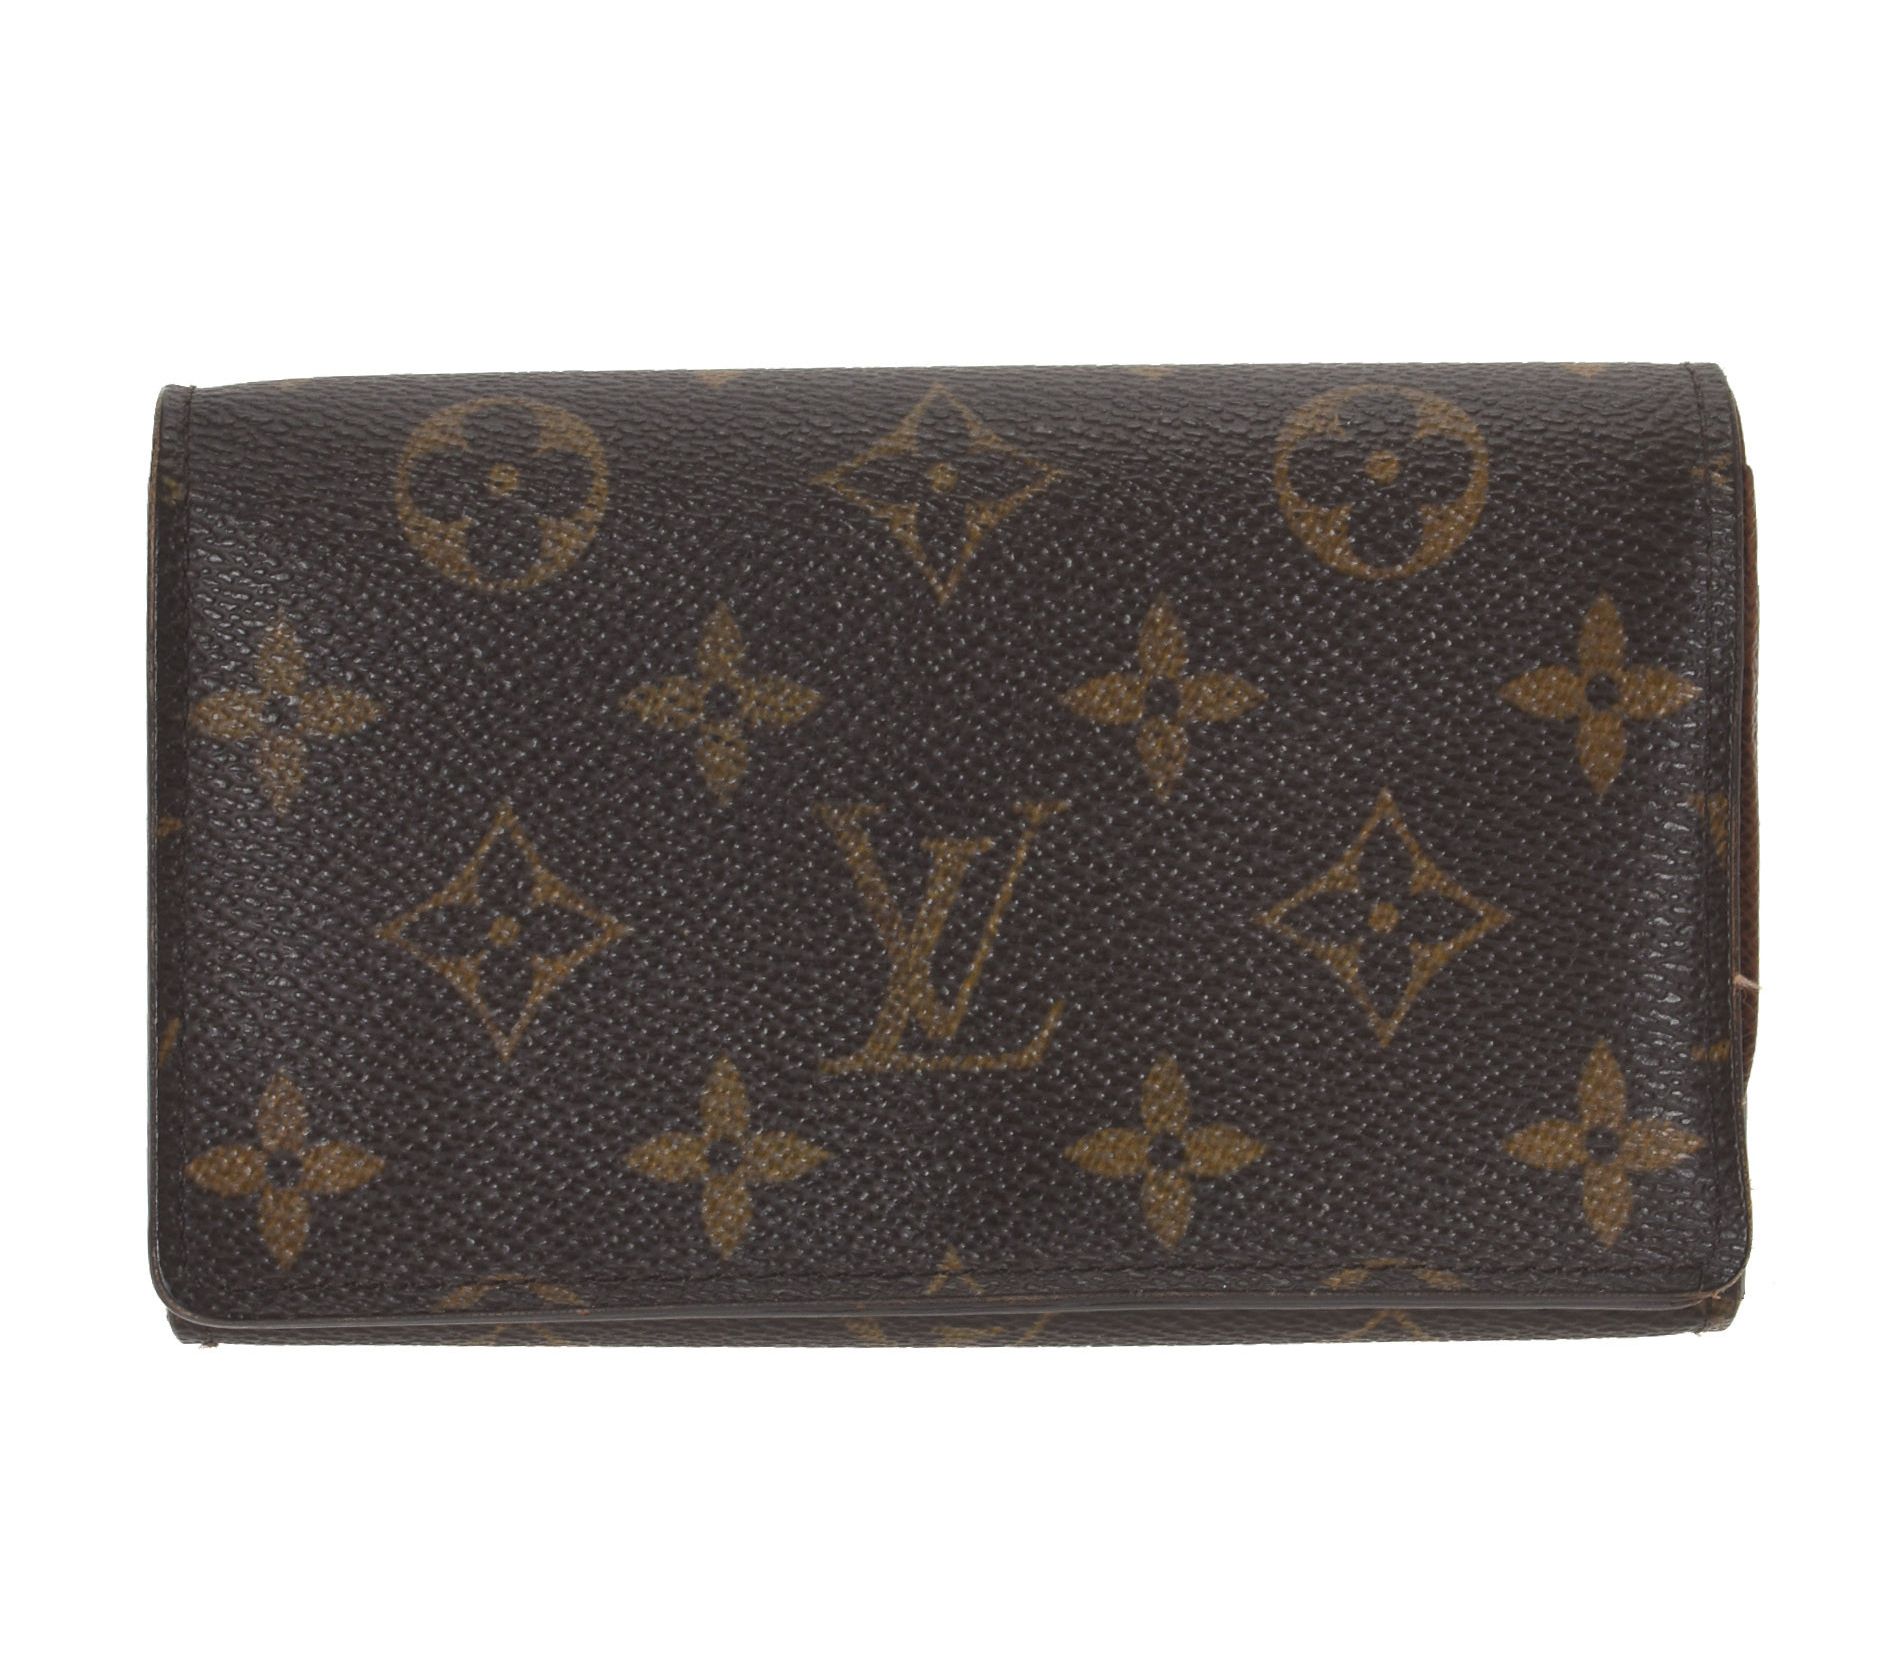 Louis Vuitton - Authenticated Belt - Cotton Brown for Women, Good Condition